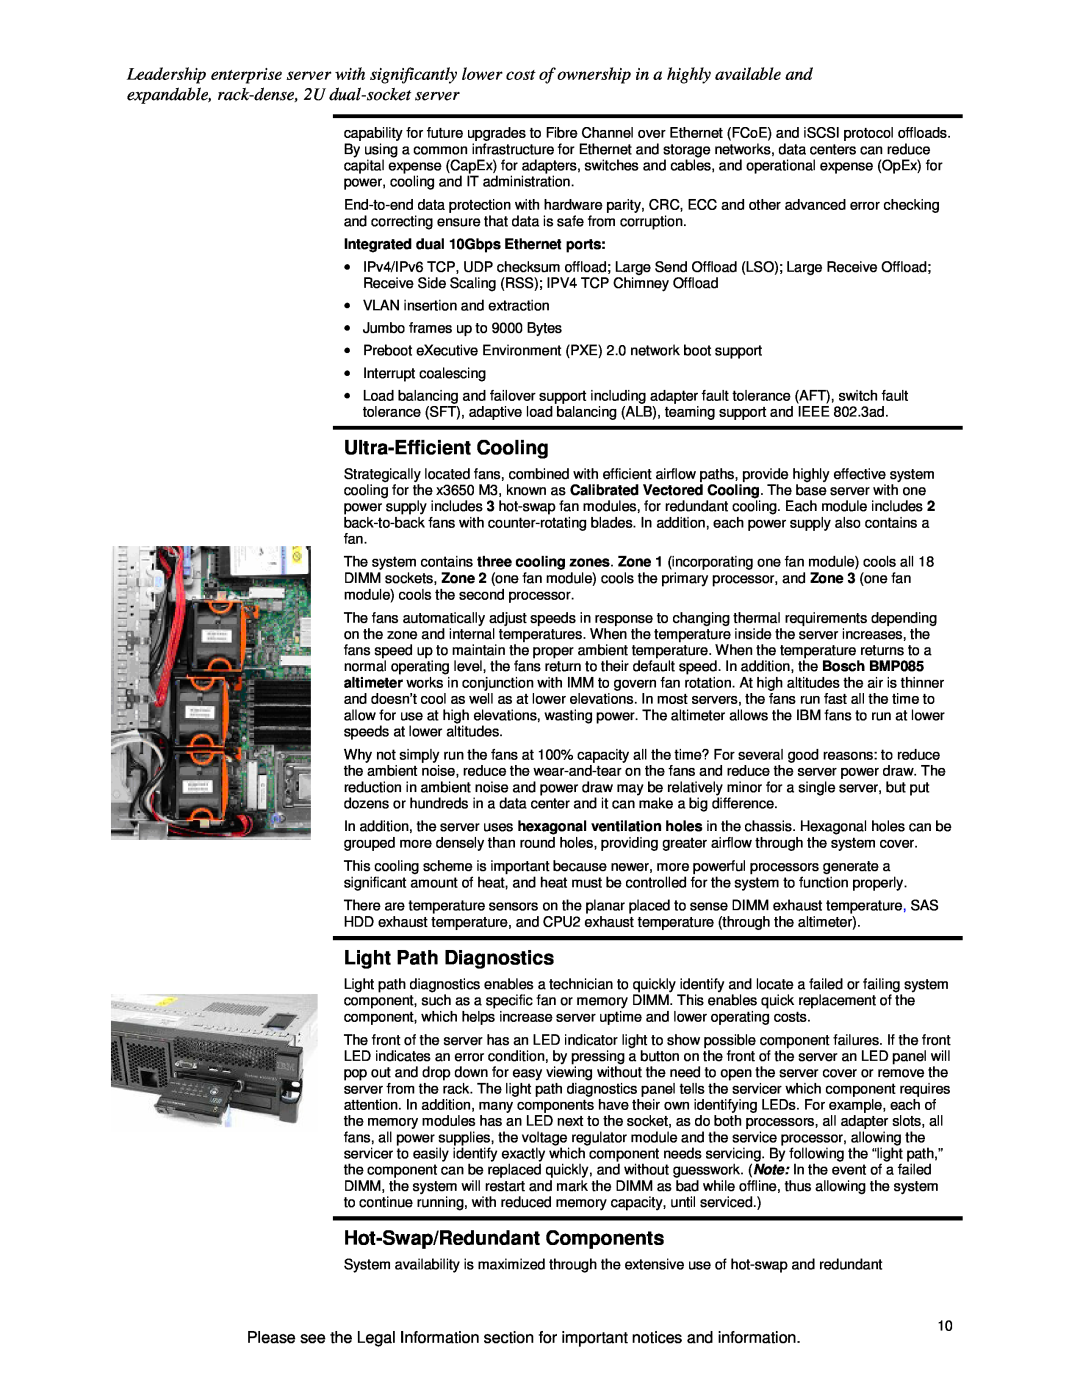 IBM X3650 M3 specifications Ultra-EfficientCooling, Light Path Diagnostics, Hot-Swap/RedundantComponents 